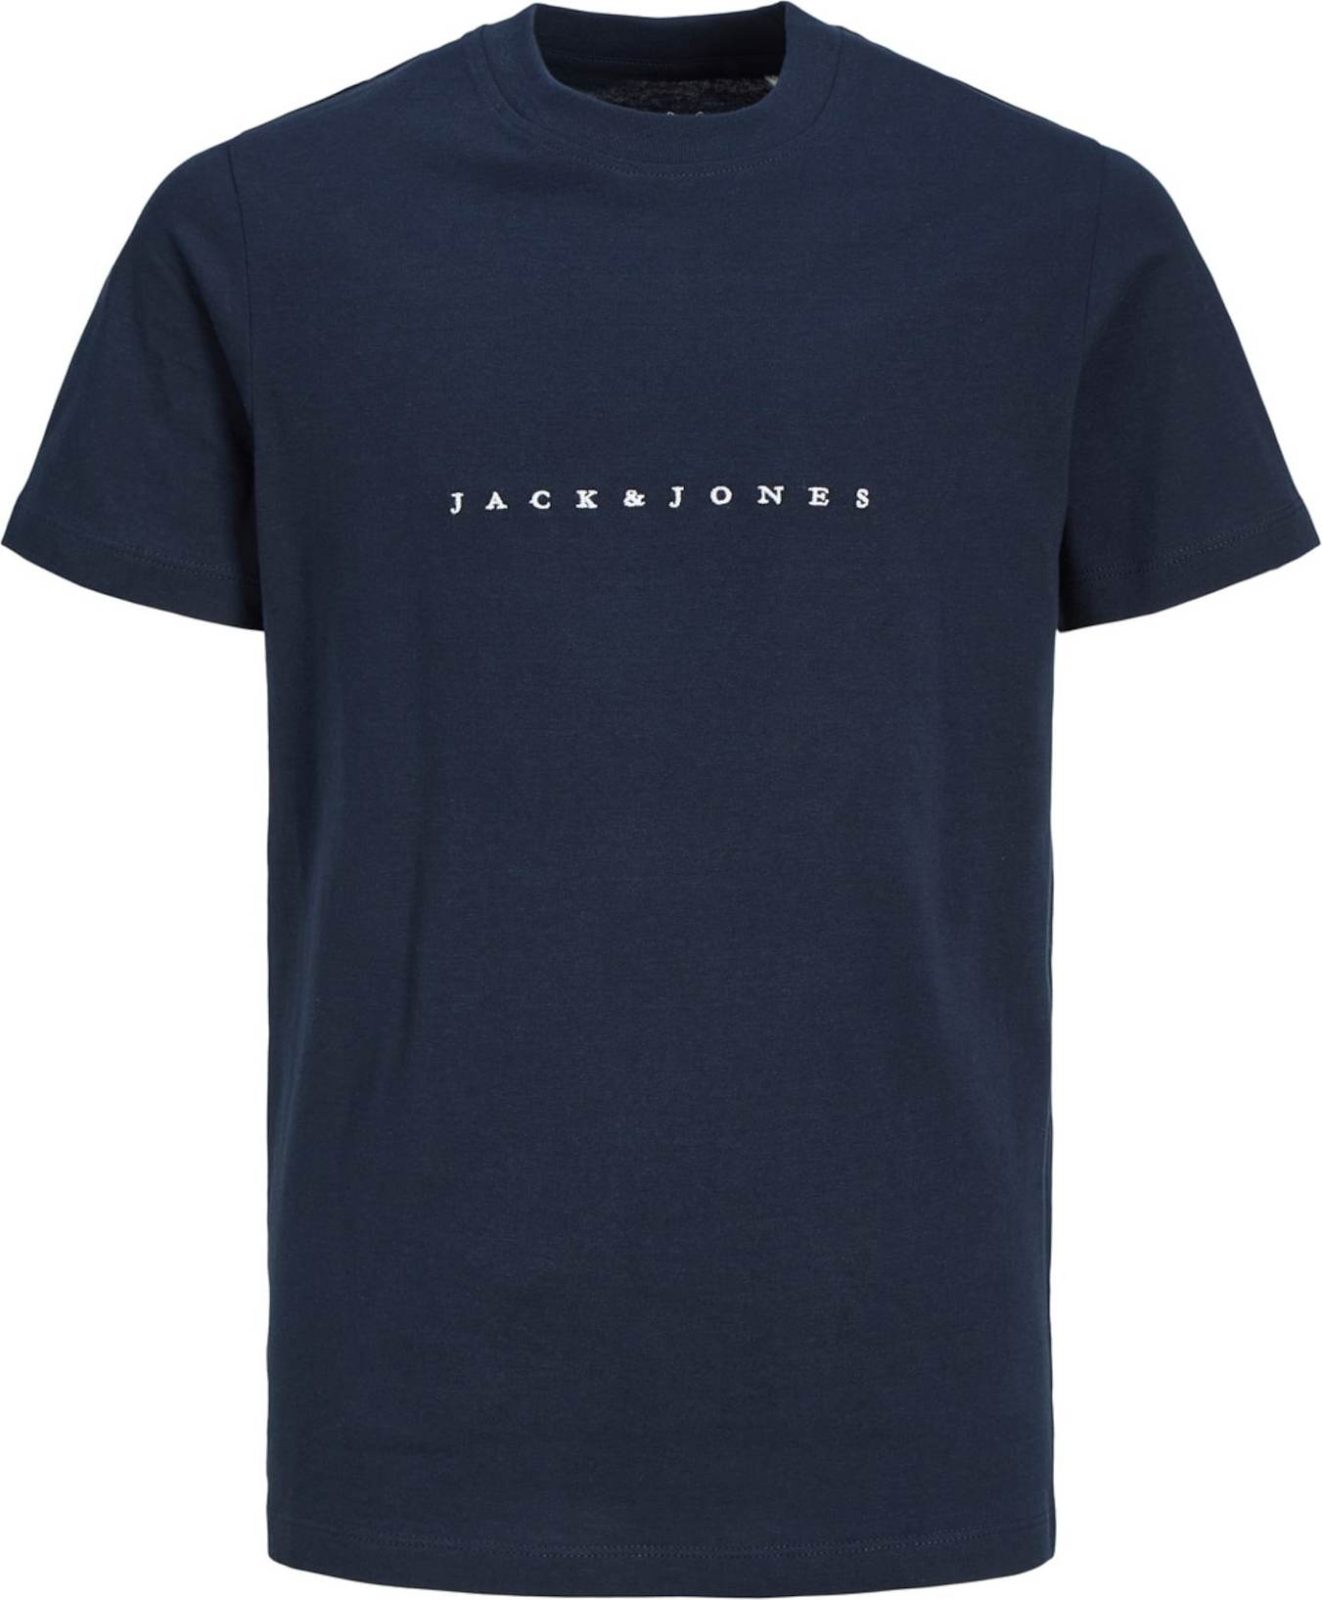 Jack & Jones Junior Tričko 'Copenhagen' námořnická modř / bílá